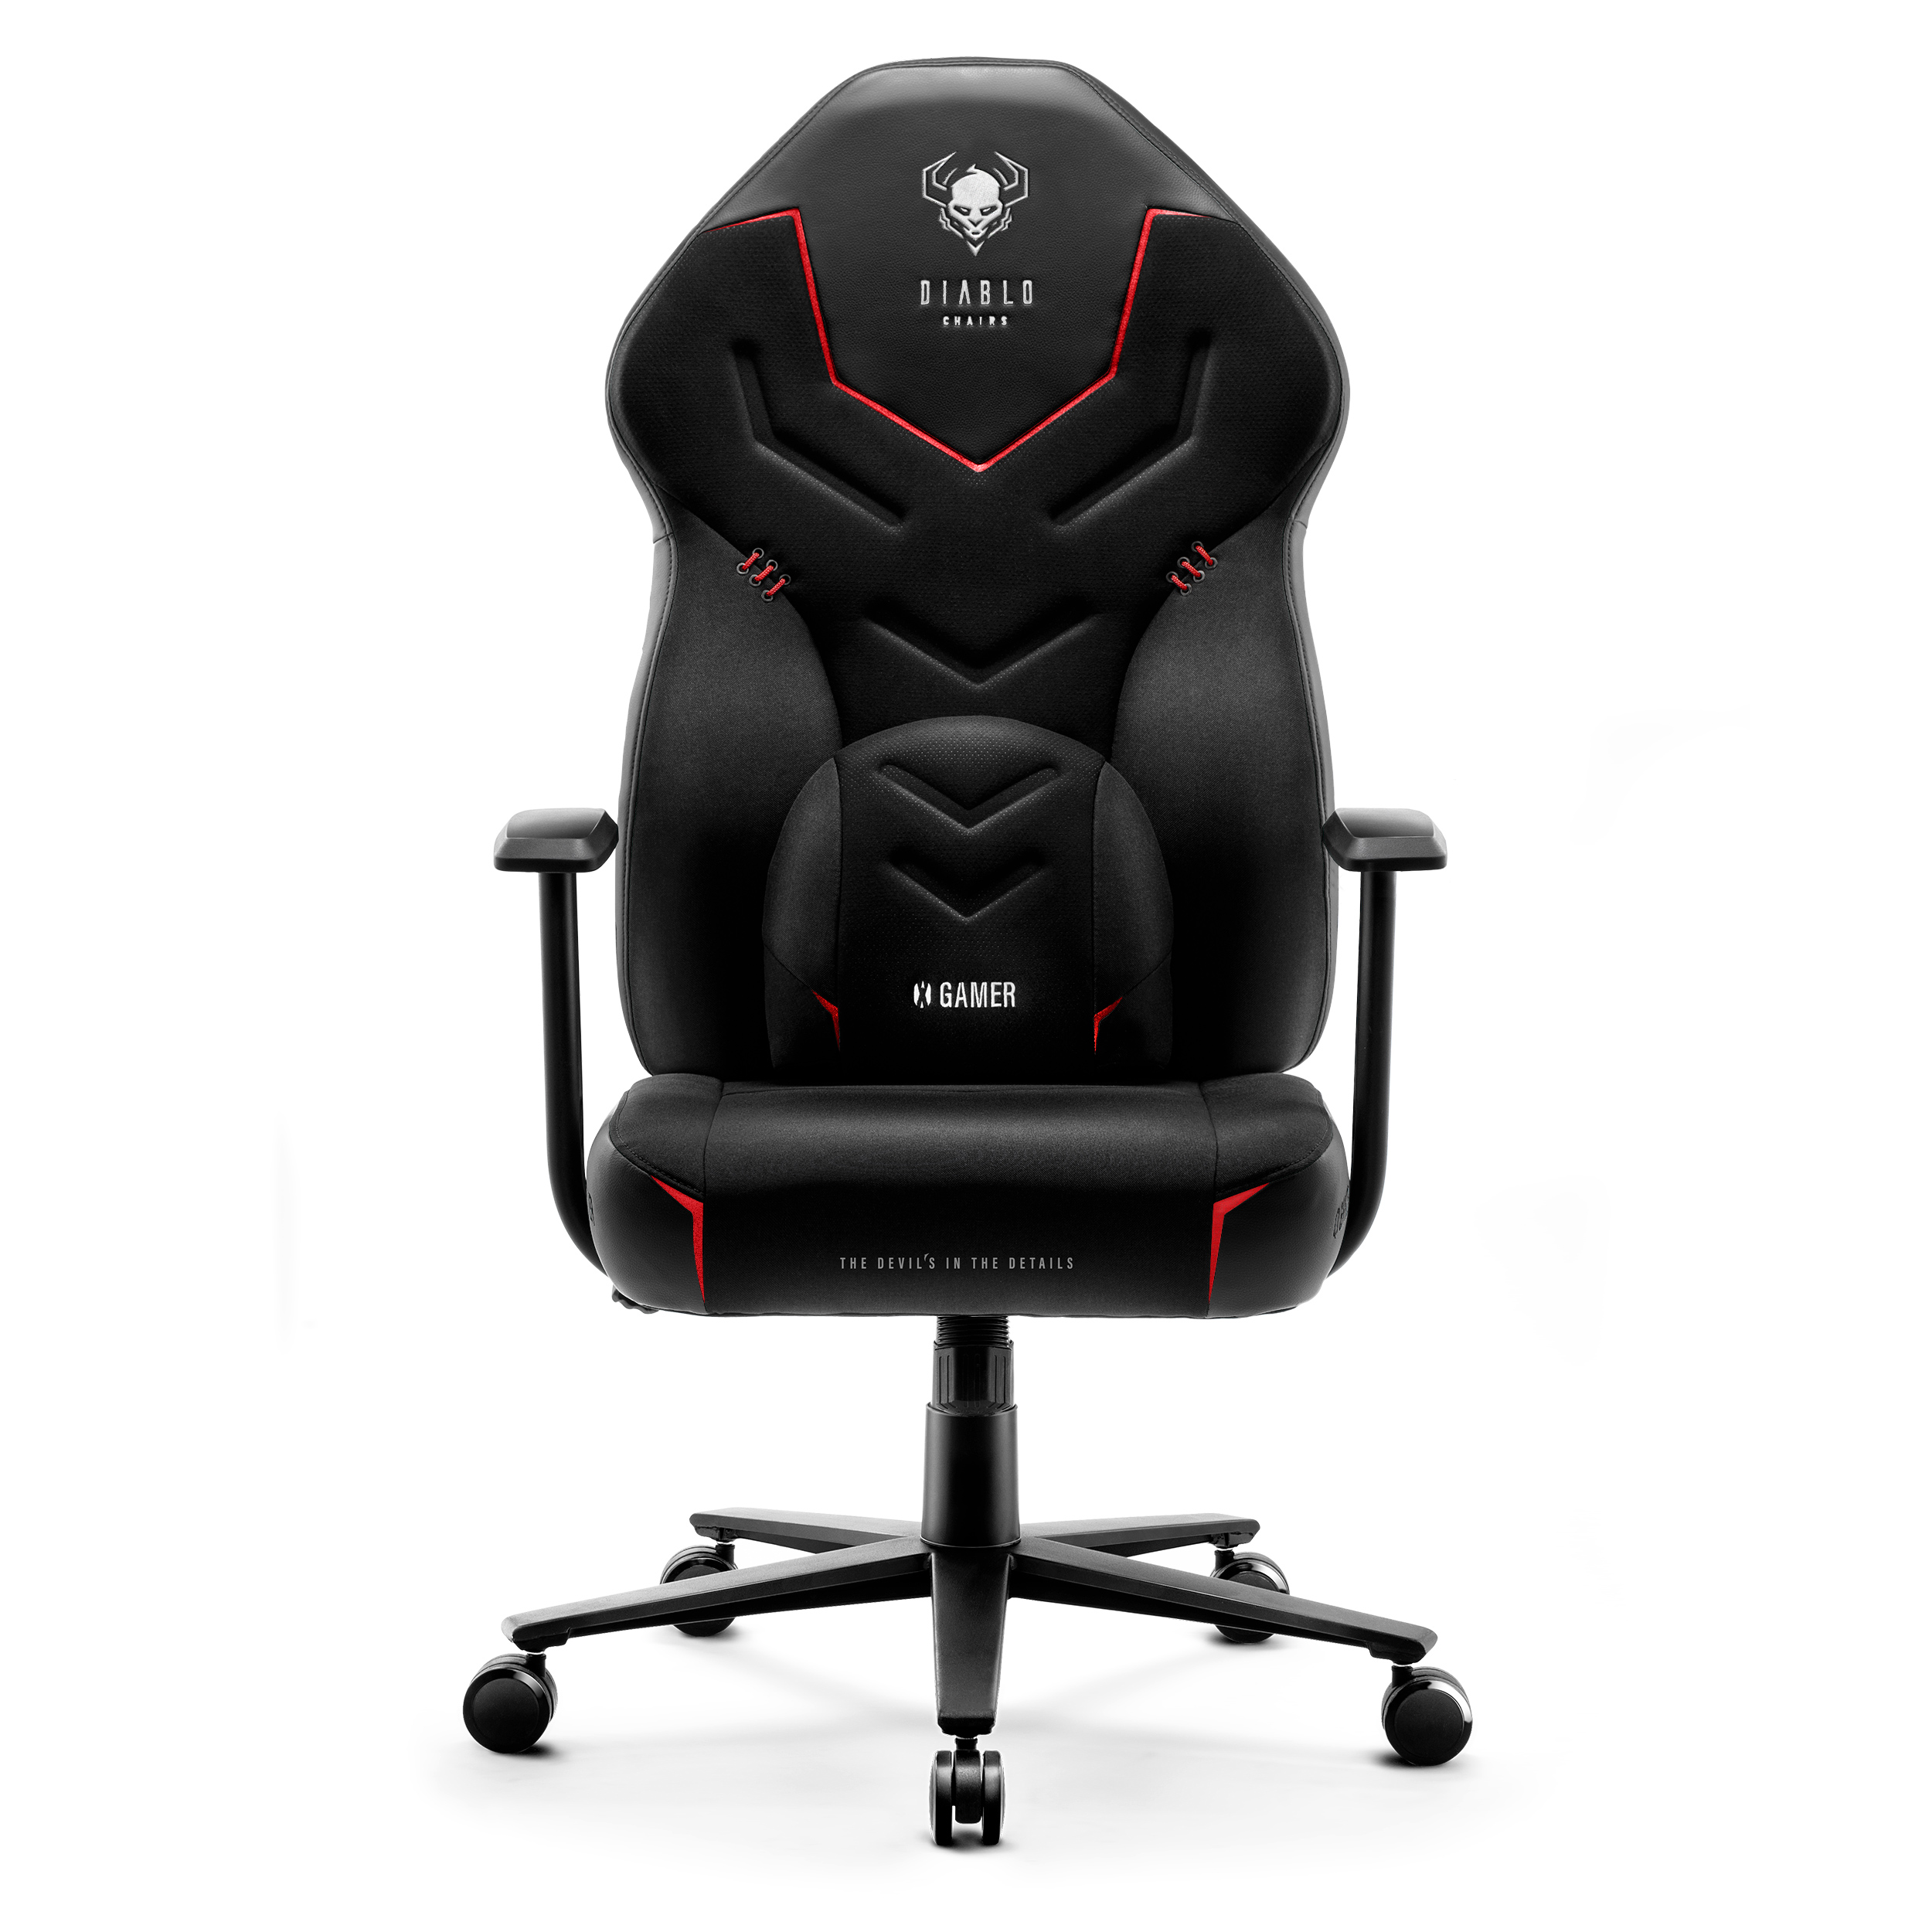 STUHL black 2.0 GAMING CHAIRS NORMAL Chair, X-GAMER DIABLO Gaming